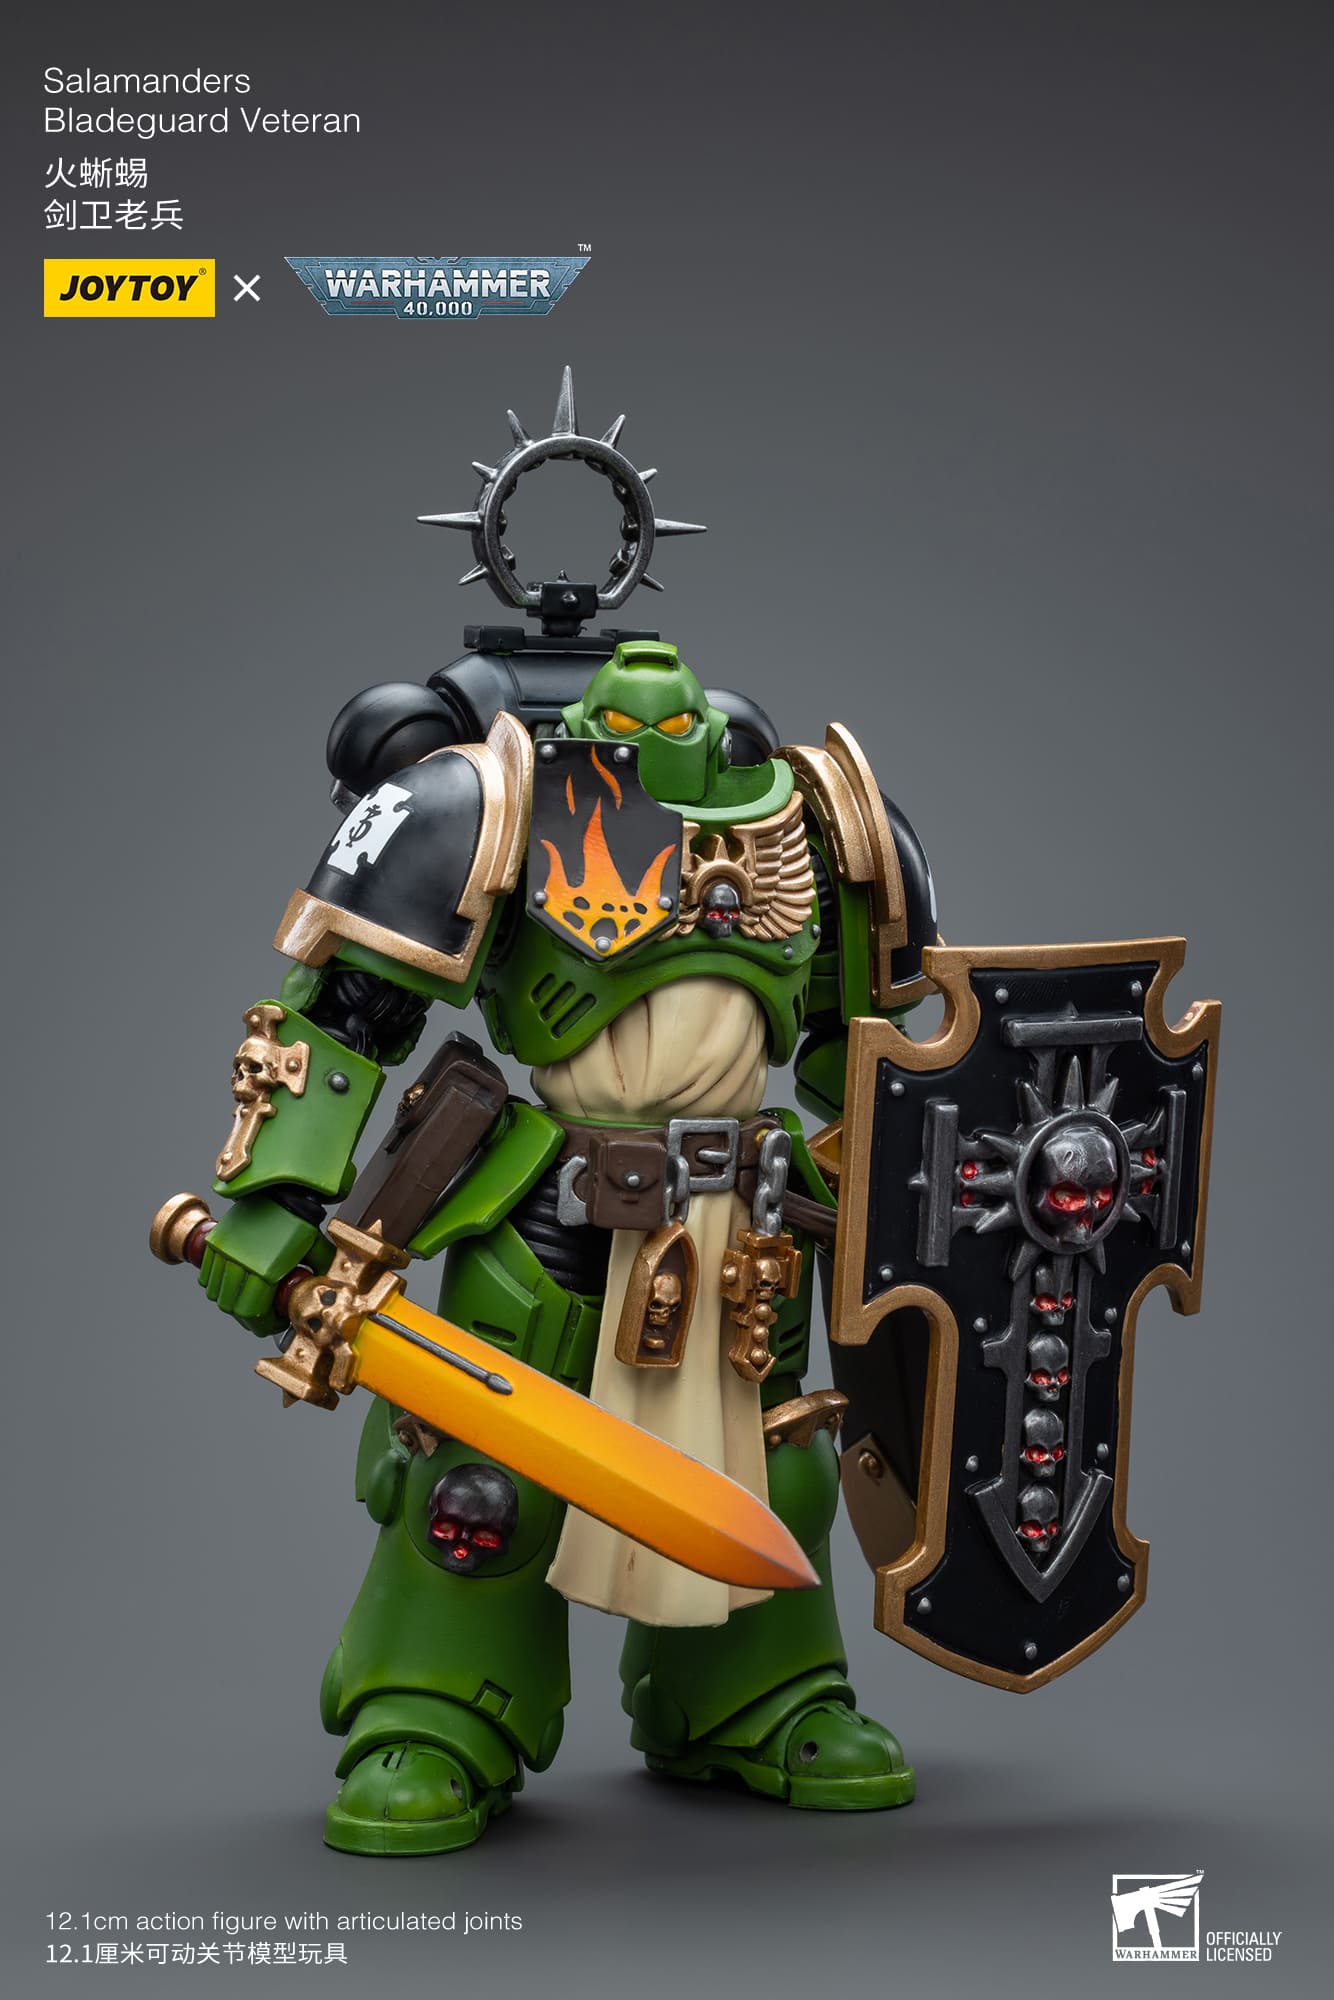 JoyToy Warhammer 40K Salamanders Bladeguard Veteran » Joytoy Figure